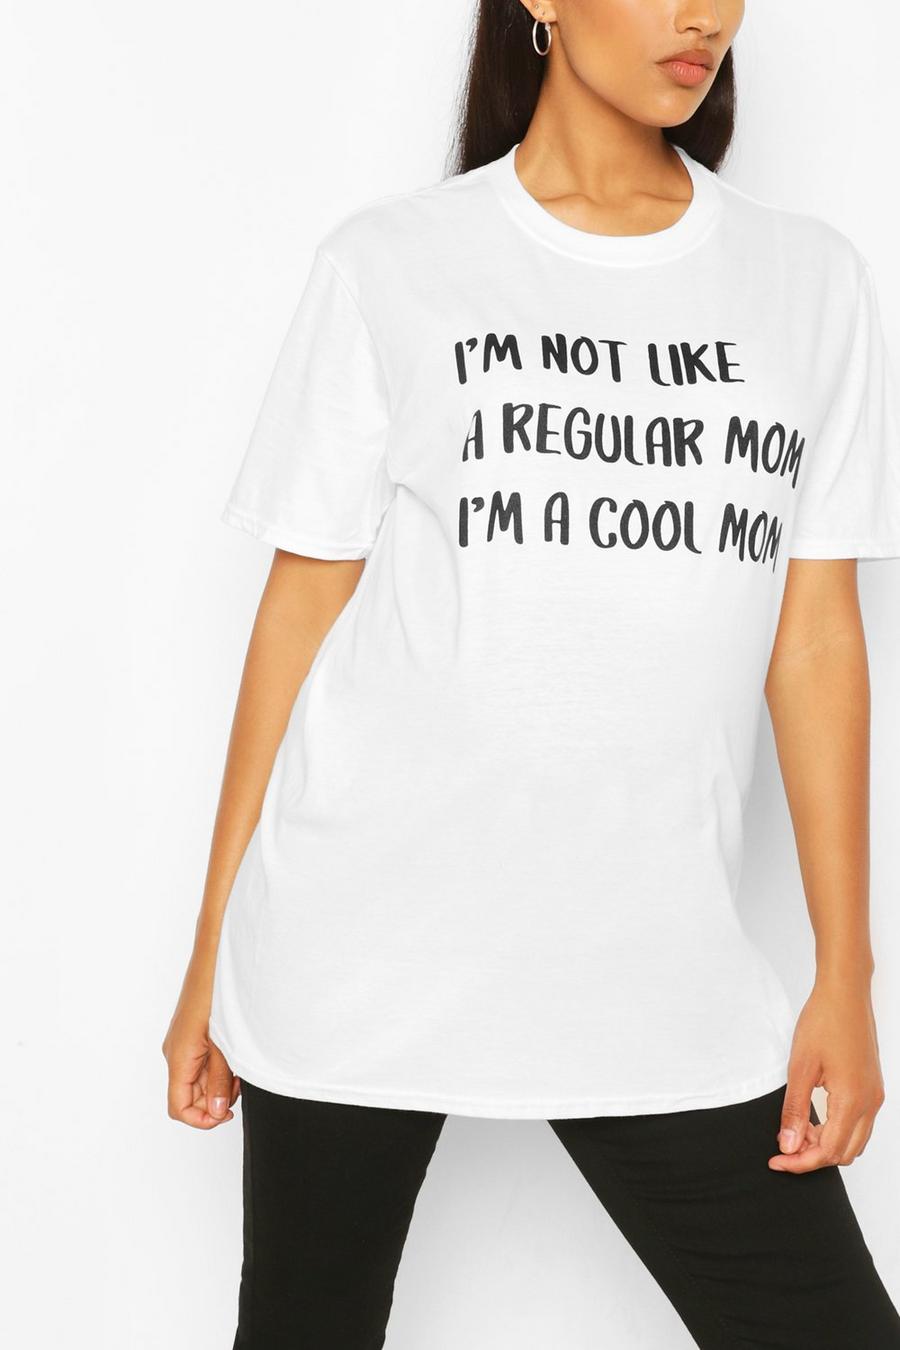 T-shirt premaman con scritta “Not a regular mom” image number 1